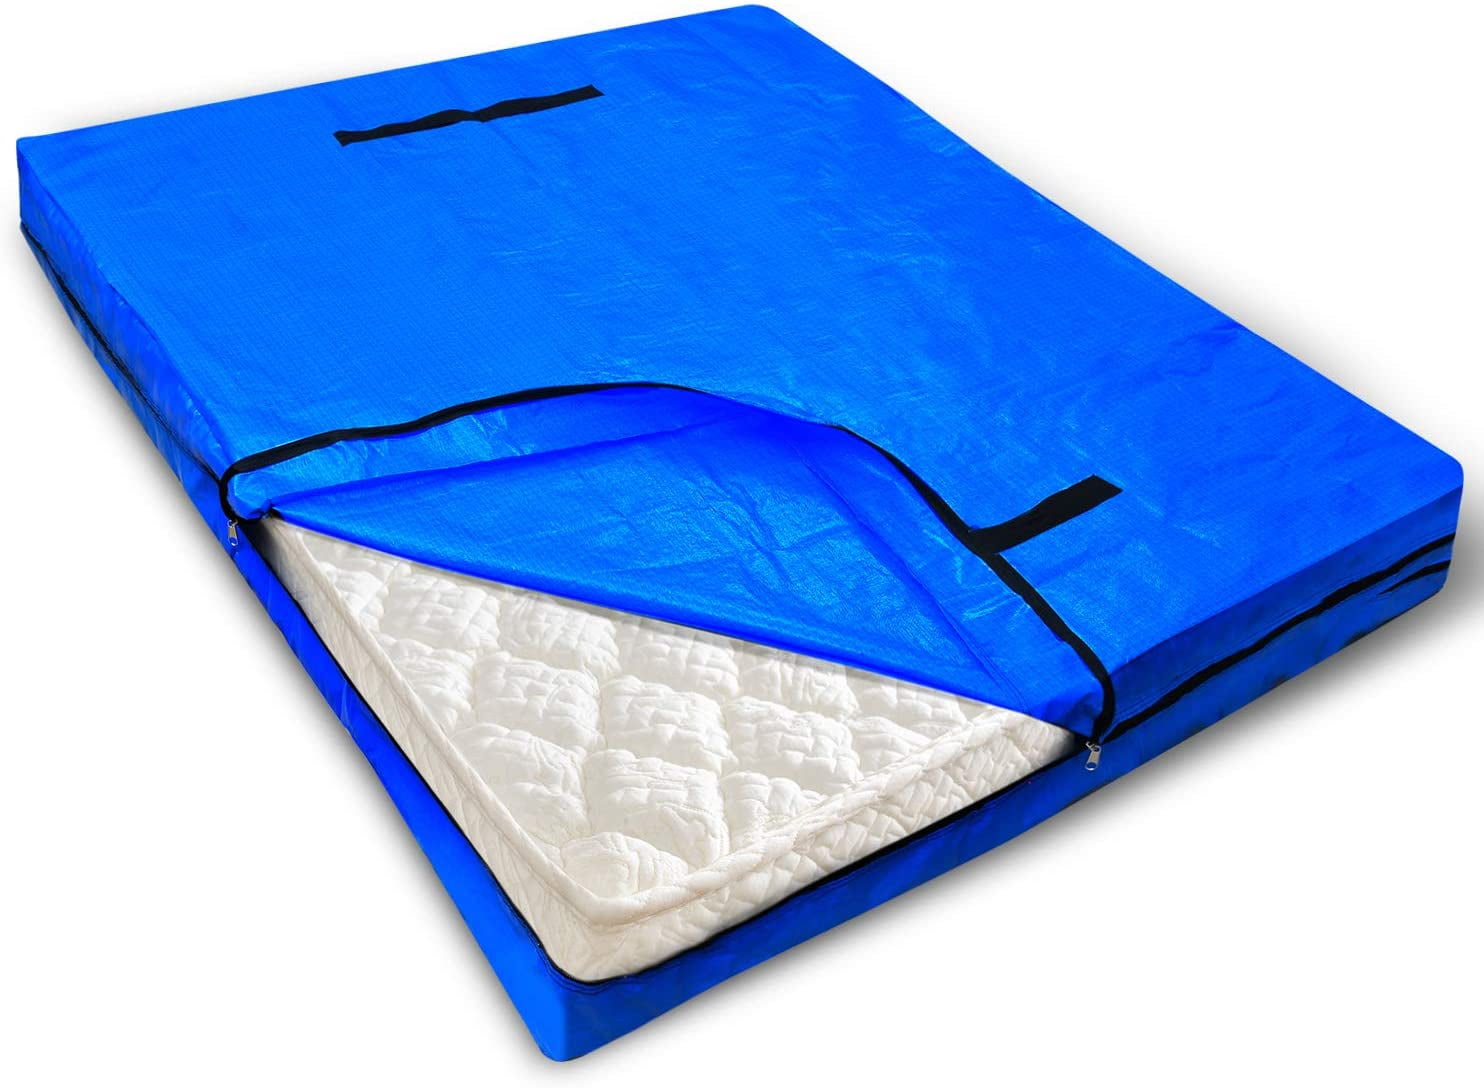 king size mattress plastic bag